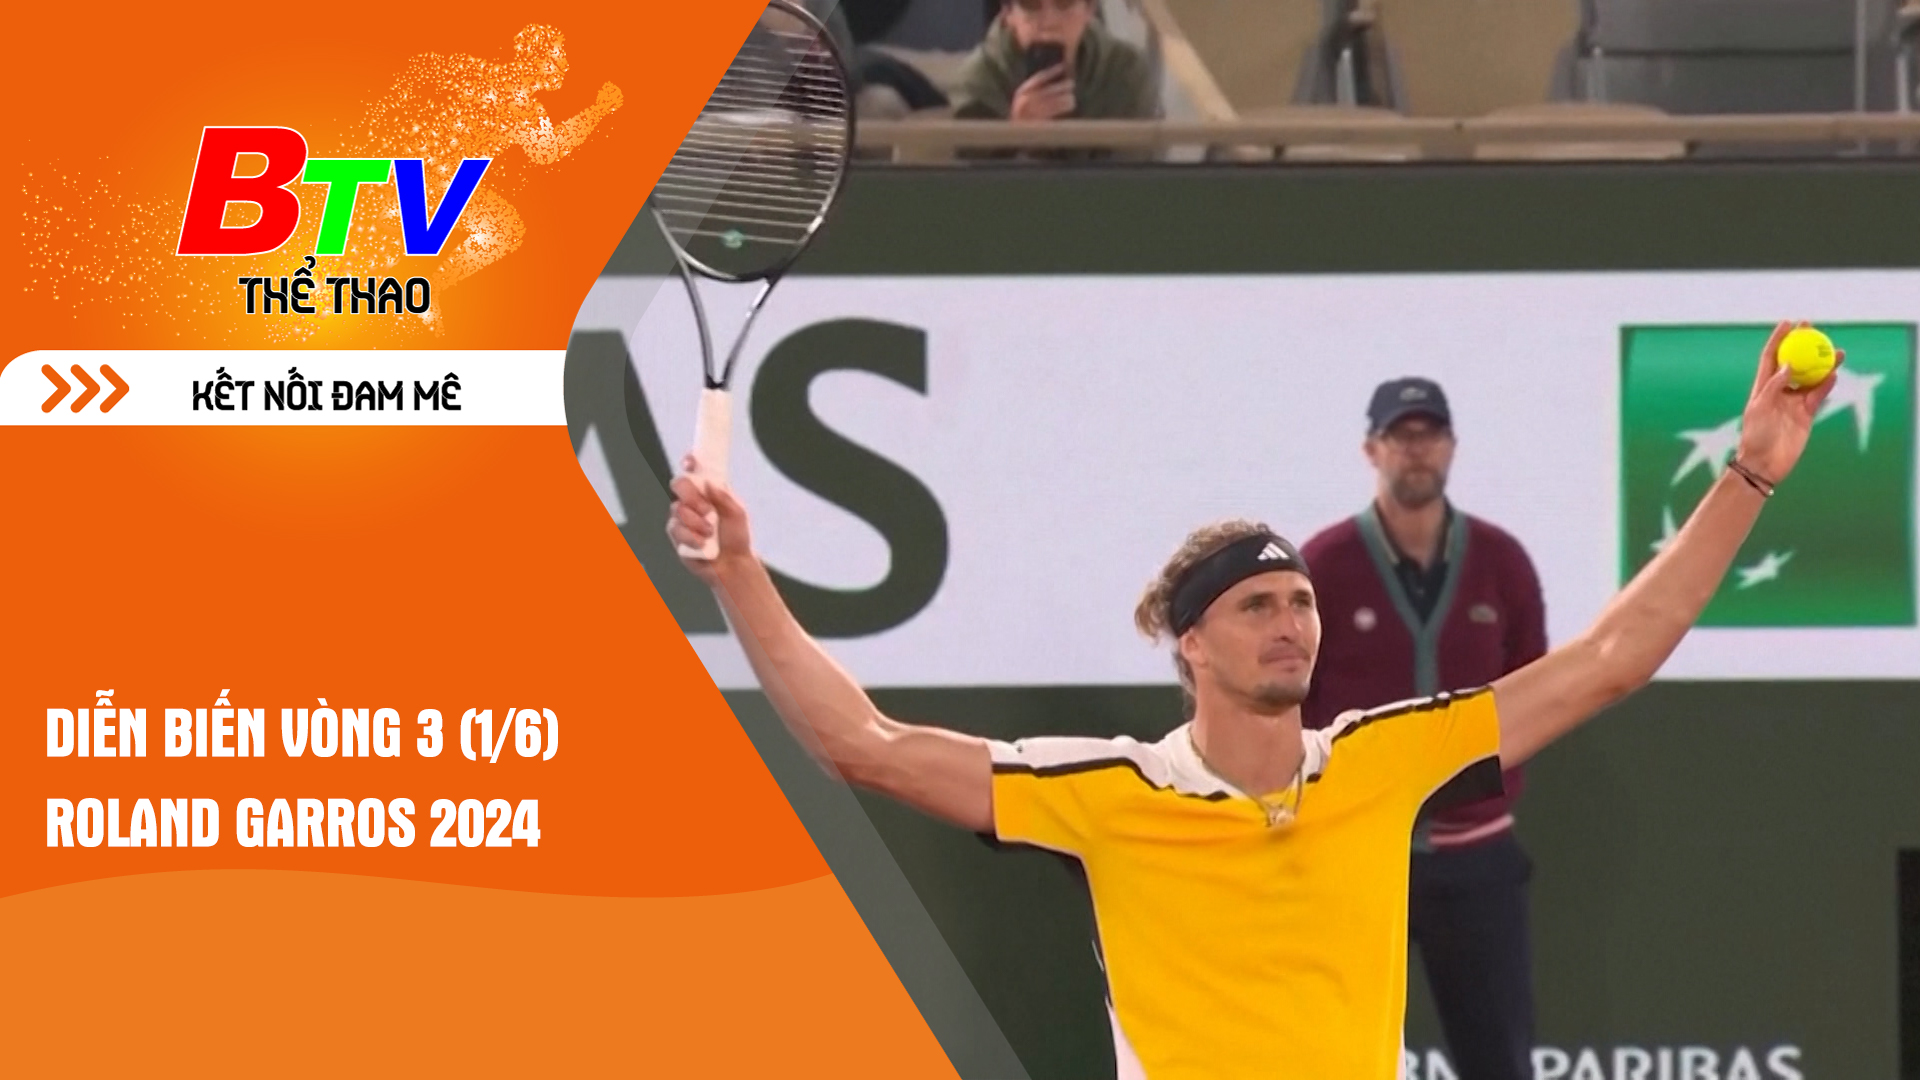 Diễn biến vòng 3 (1/6) Roland Garros 2024 | Tin Thể thao 24h